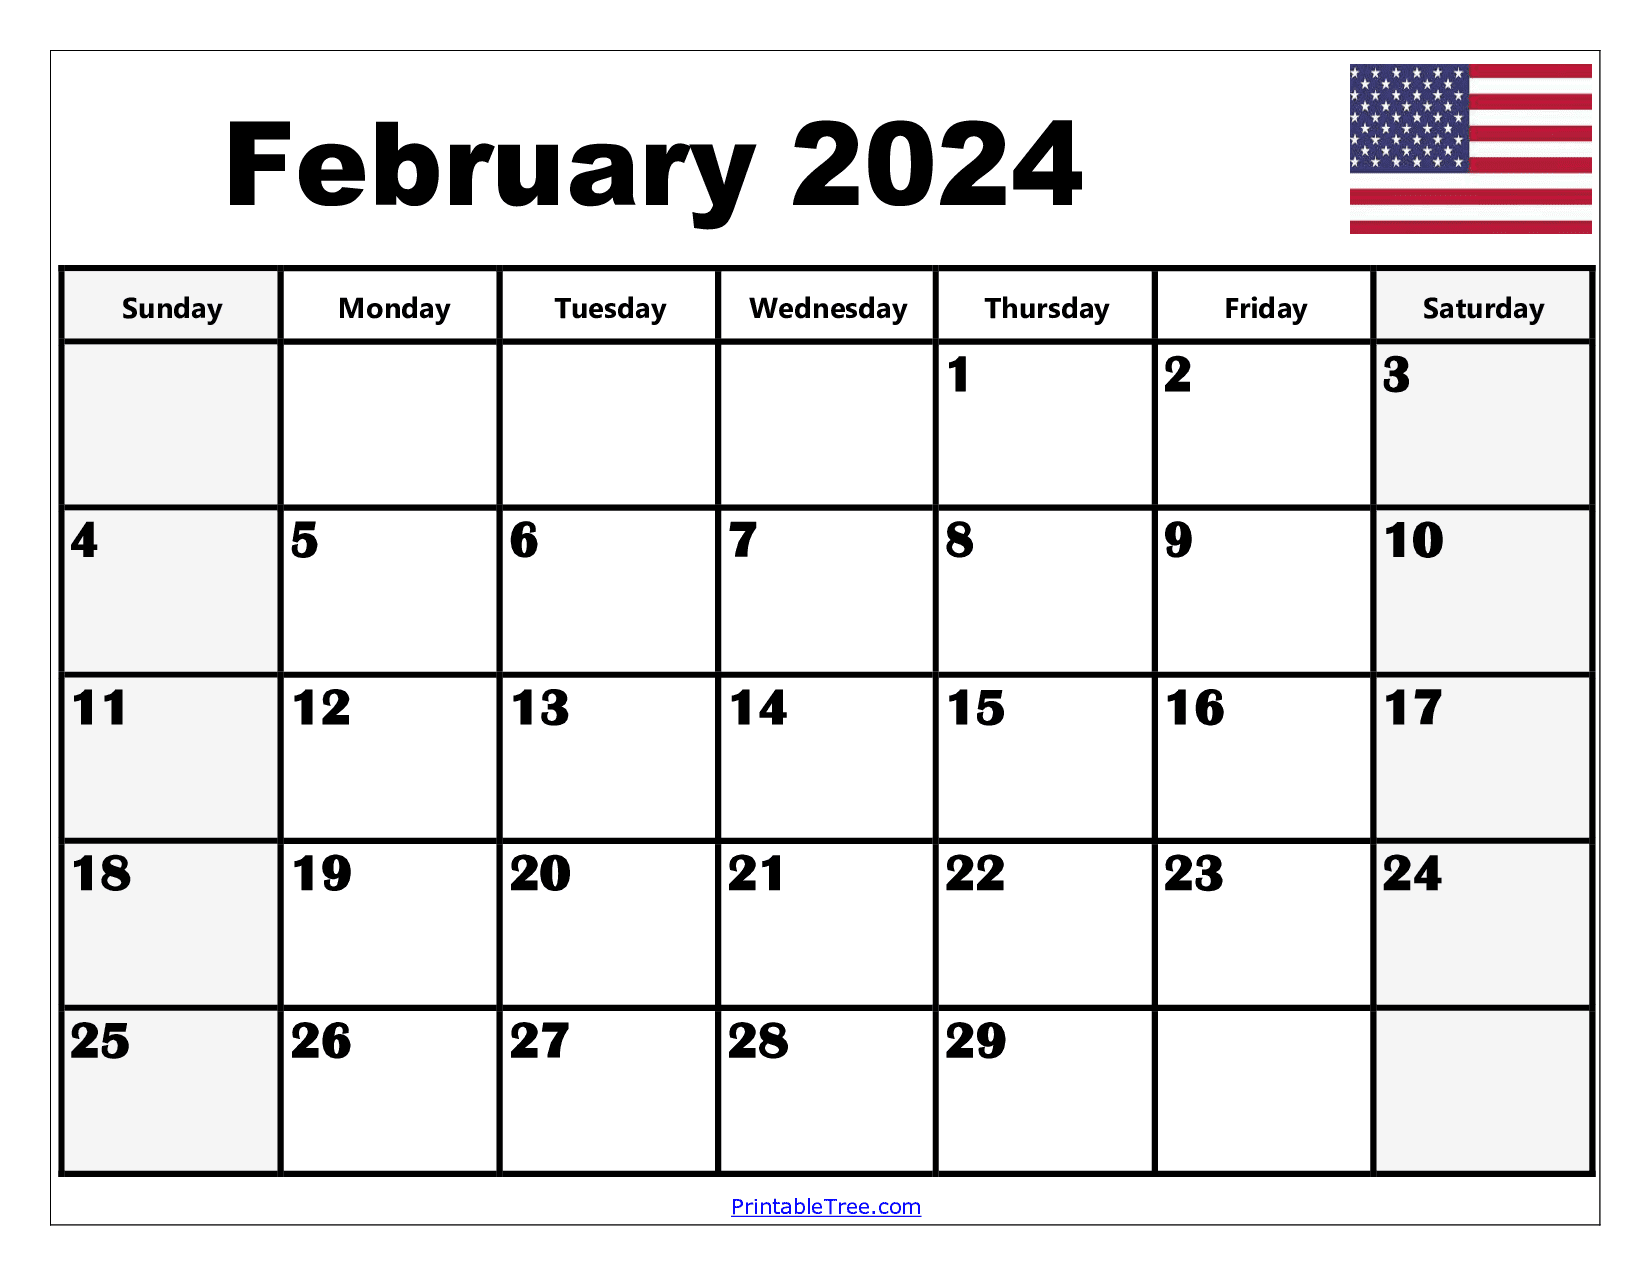 February 2024 Calendar Printable Pdf Template With Holidays for February 2024 Calendar Printable With Holidays